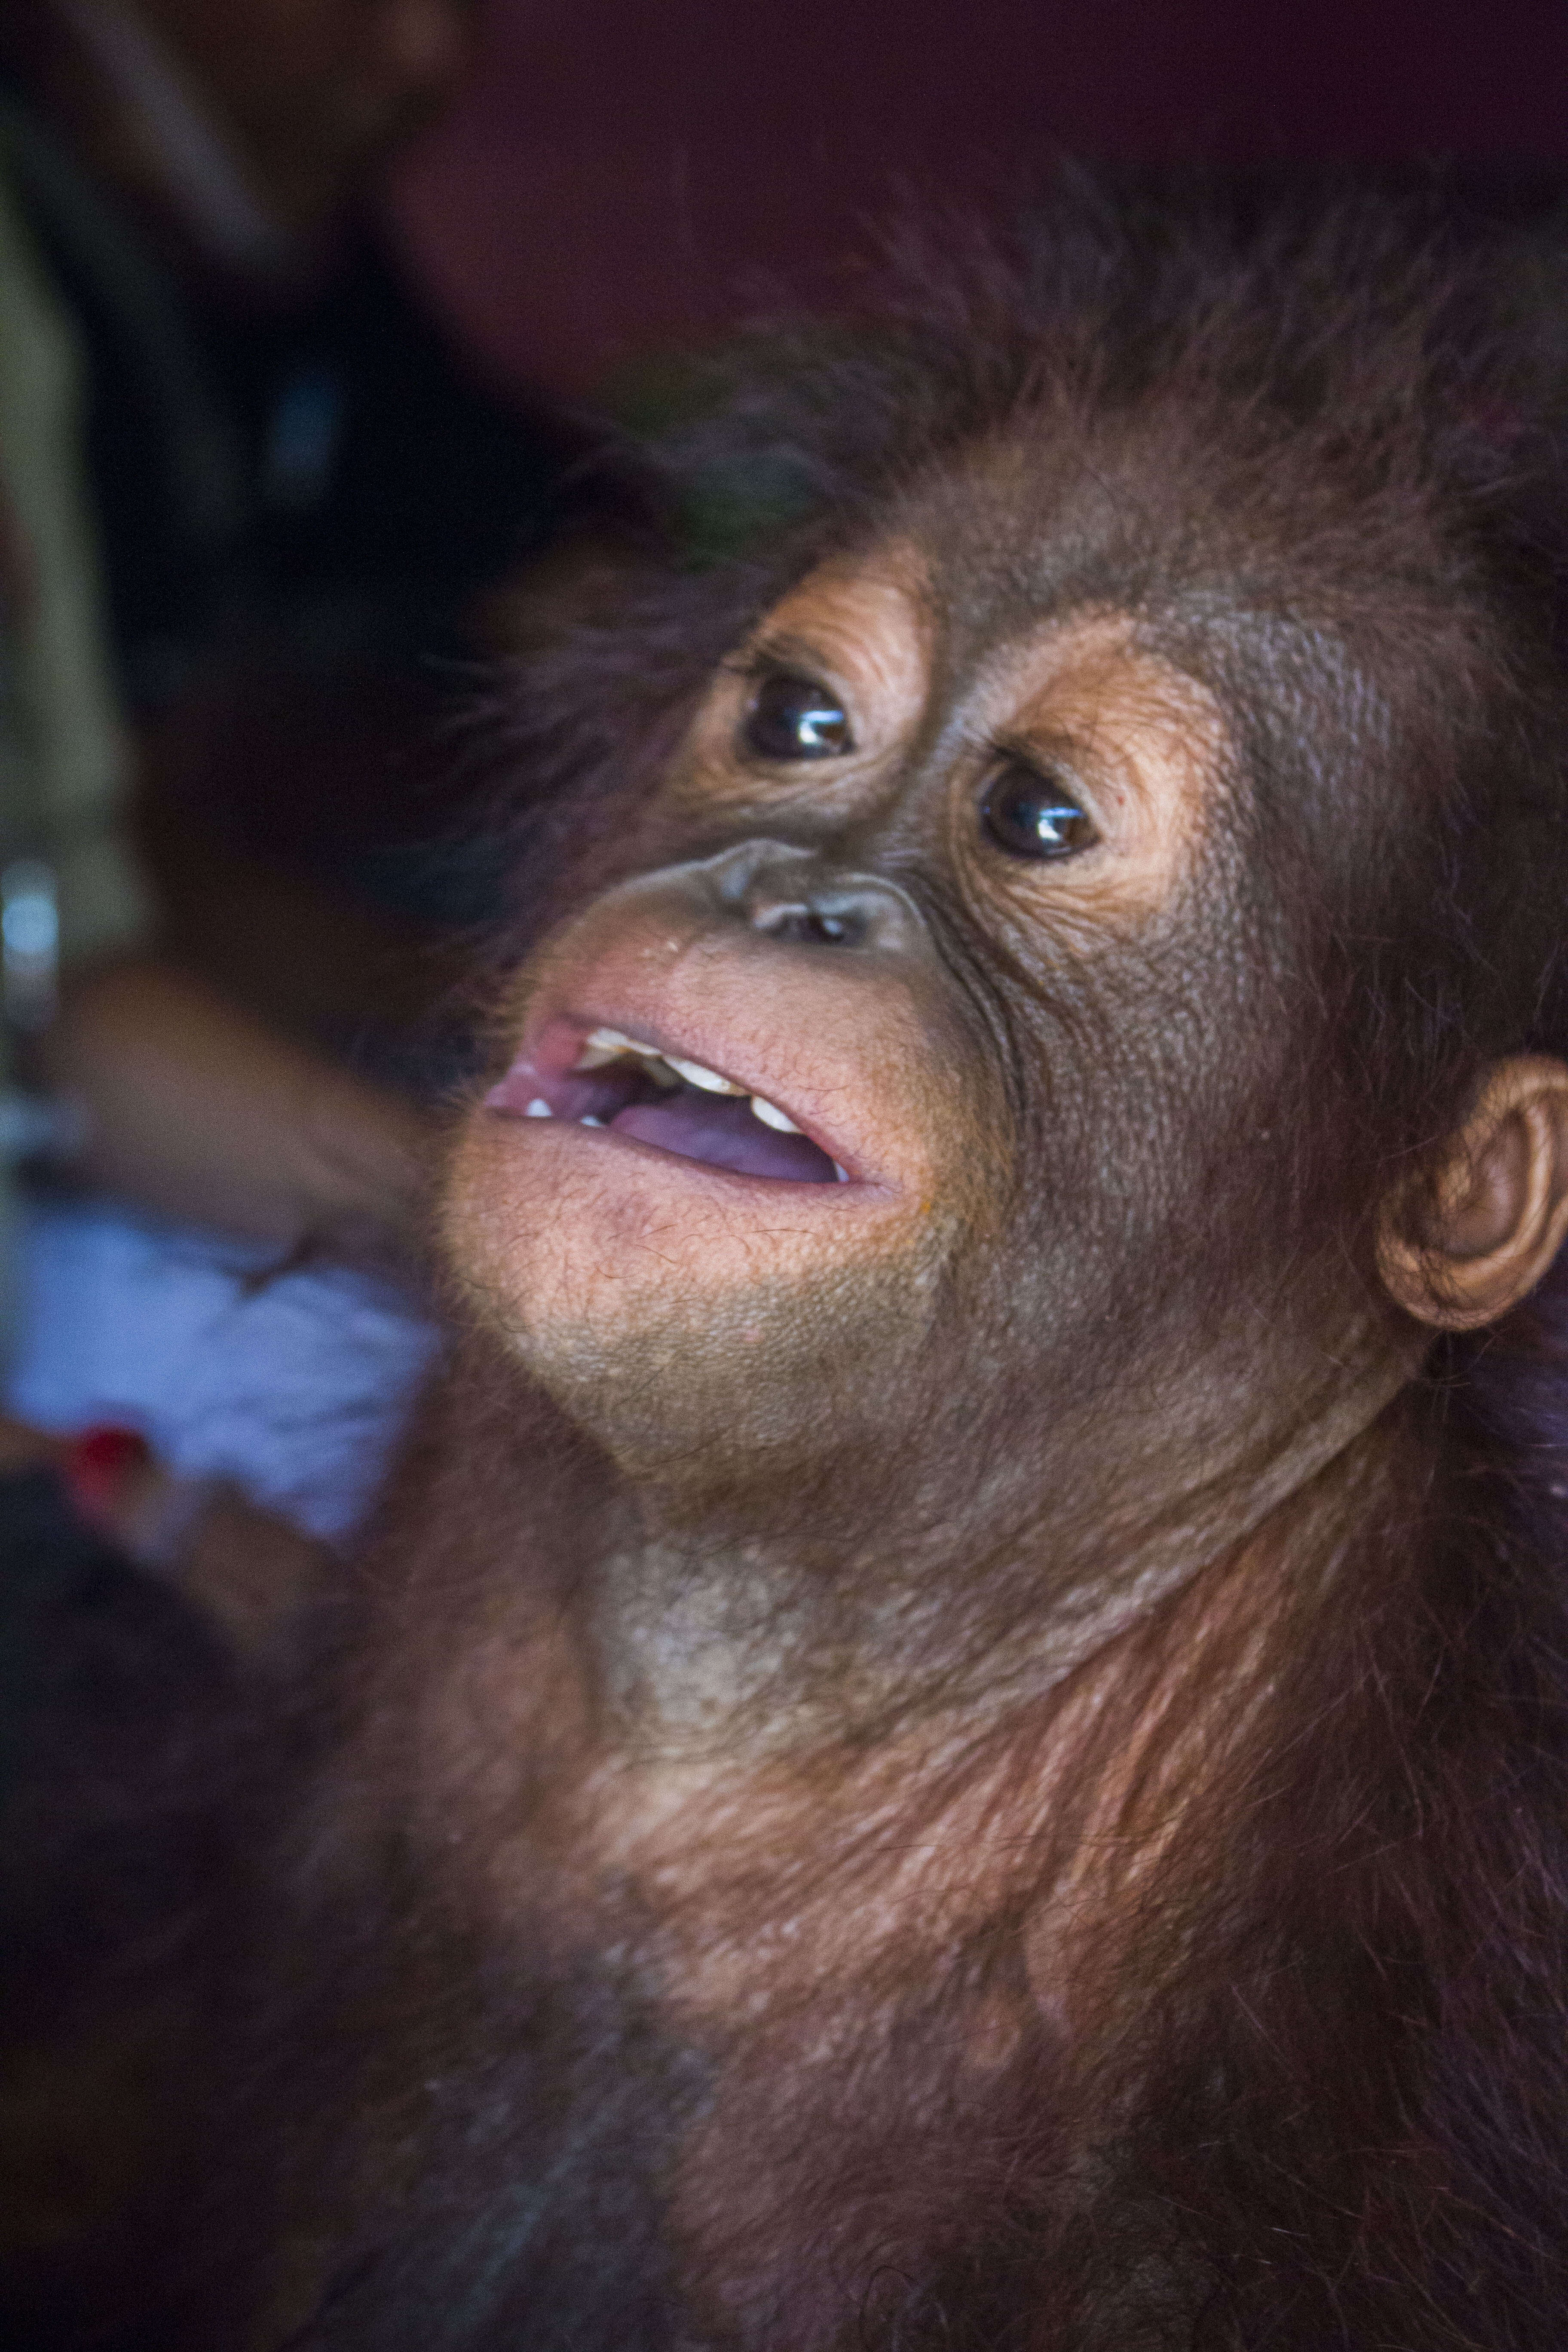 Baby orangutan looking upwards